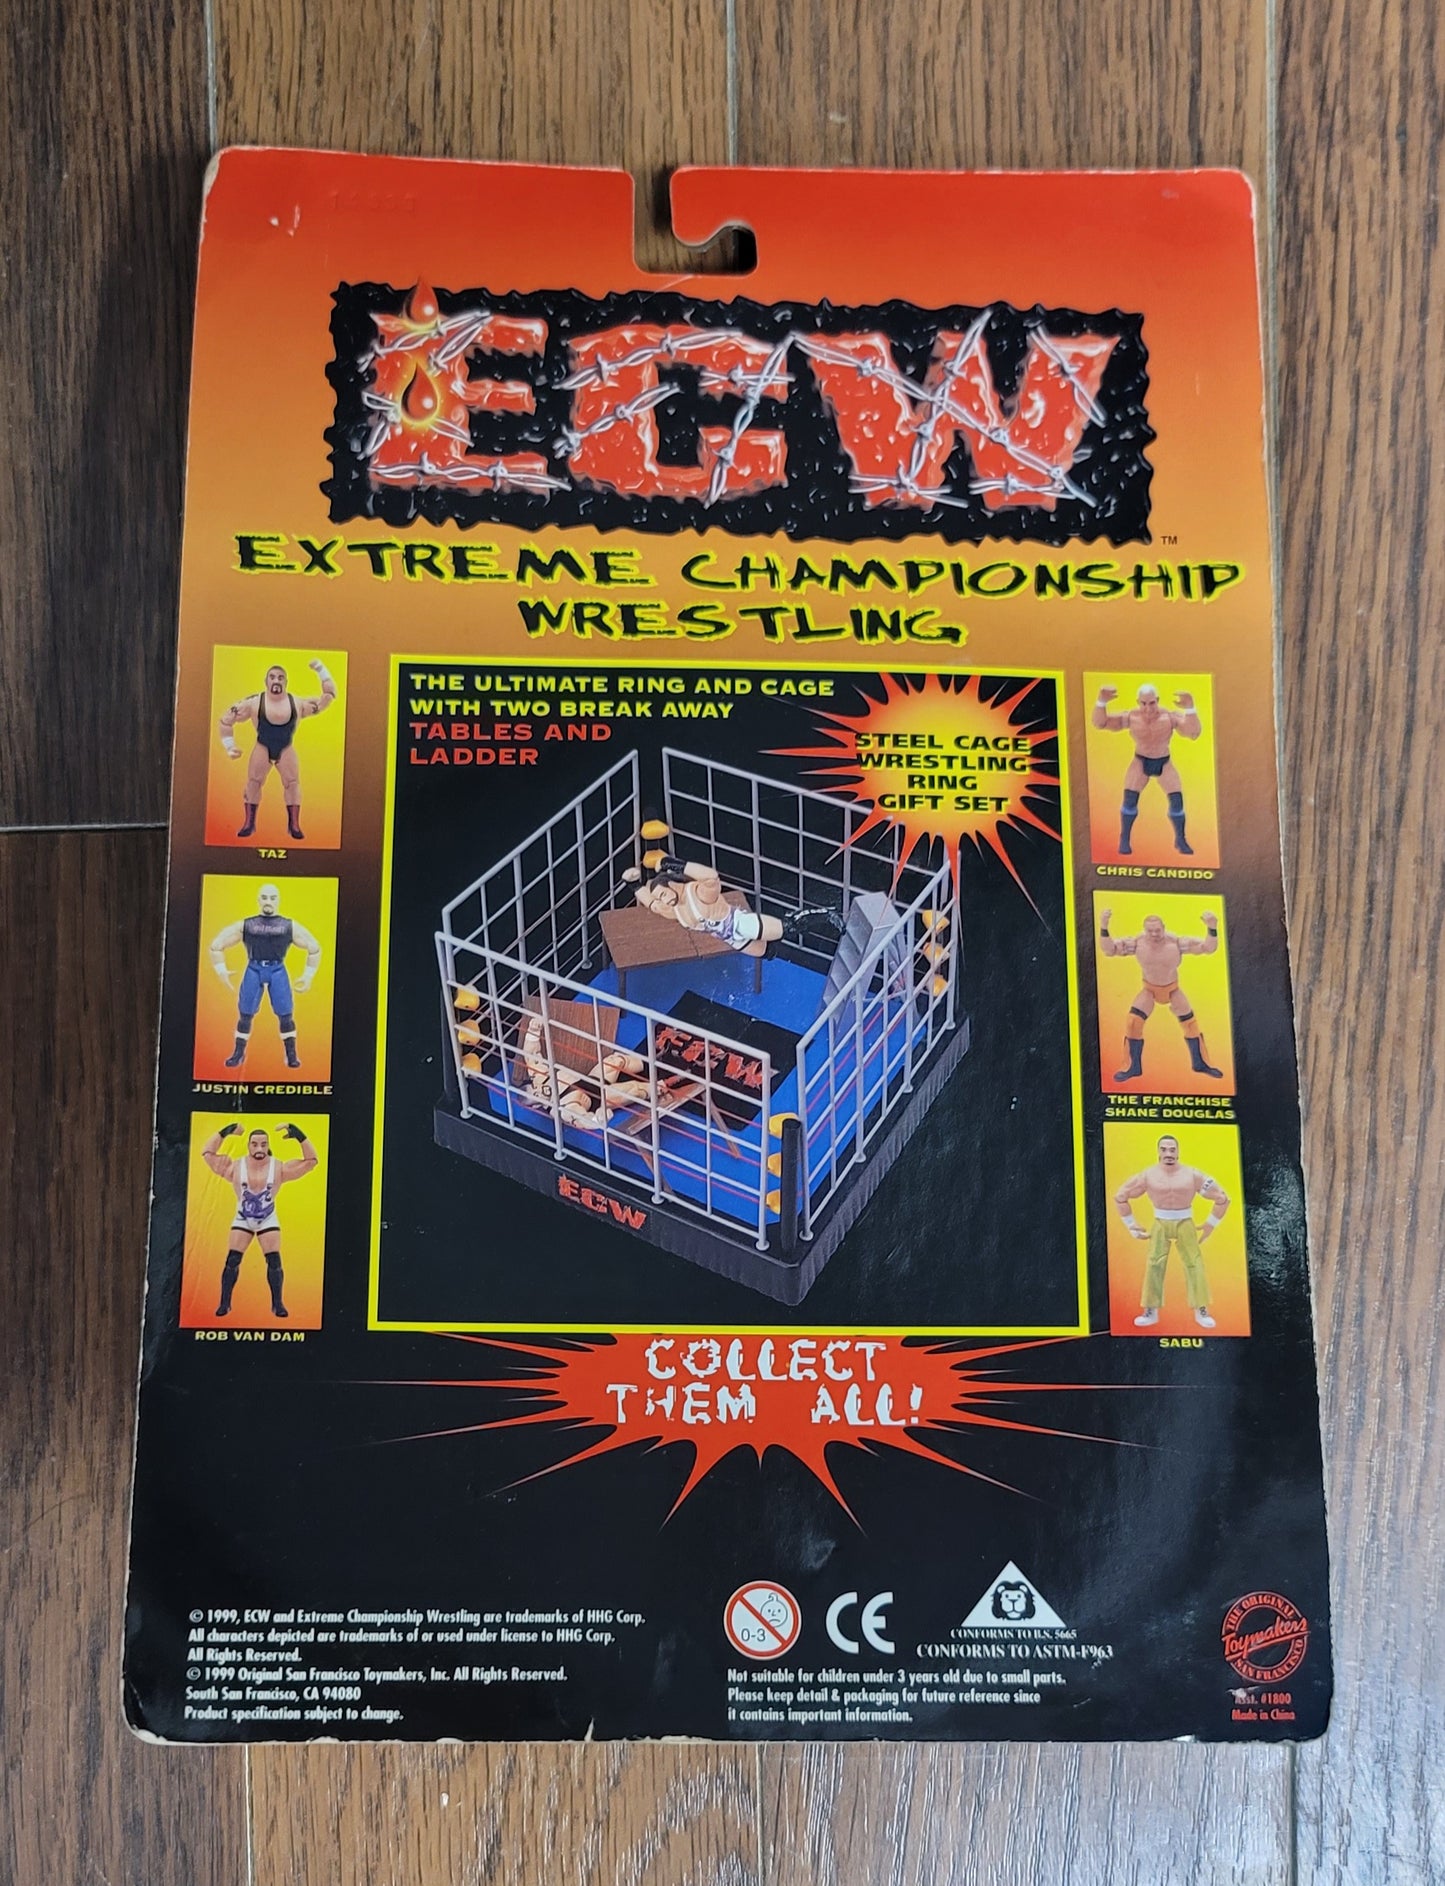 1999 Toy Makers ECW Rob Van Dam Hardcore Wrestling Action Figure